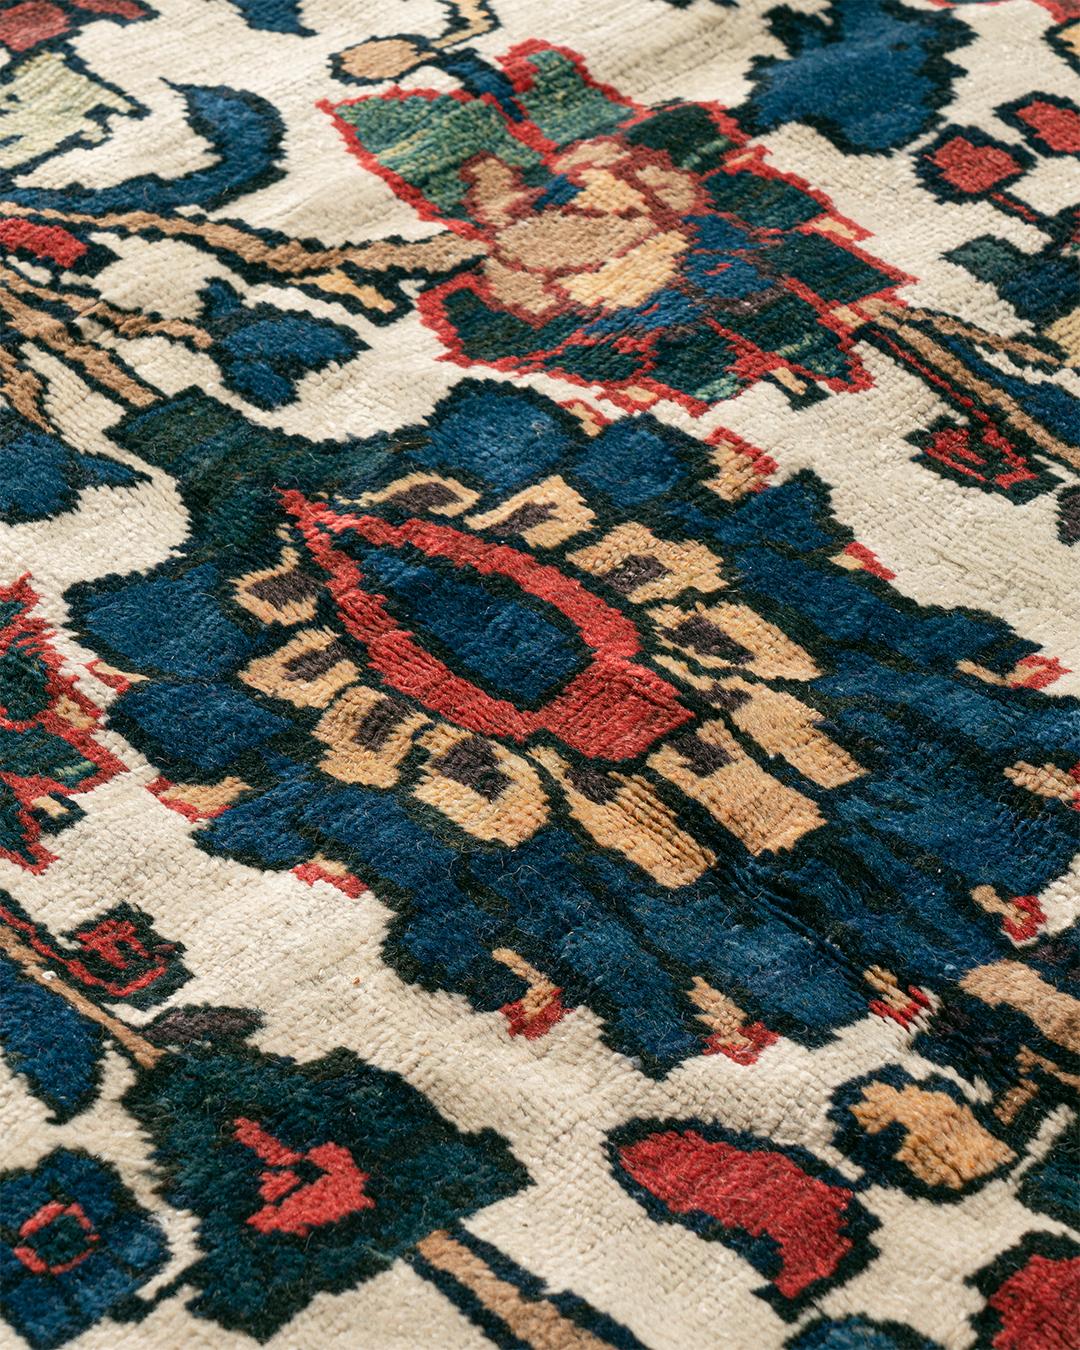 Oversize Antique Persian Baktiari Rug, circa 1890  12' x 18'10 For Sale 8